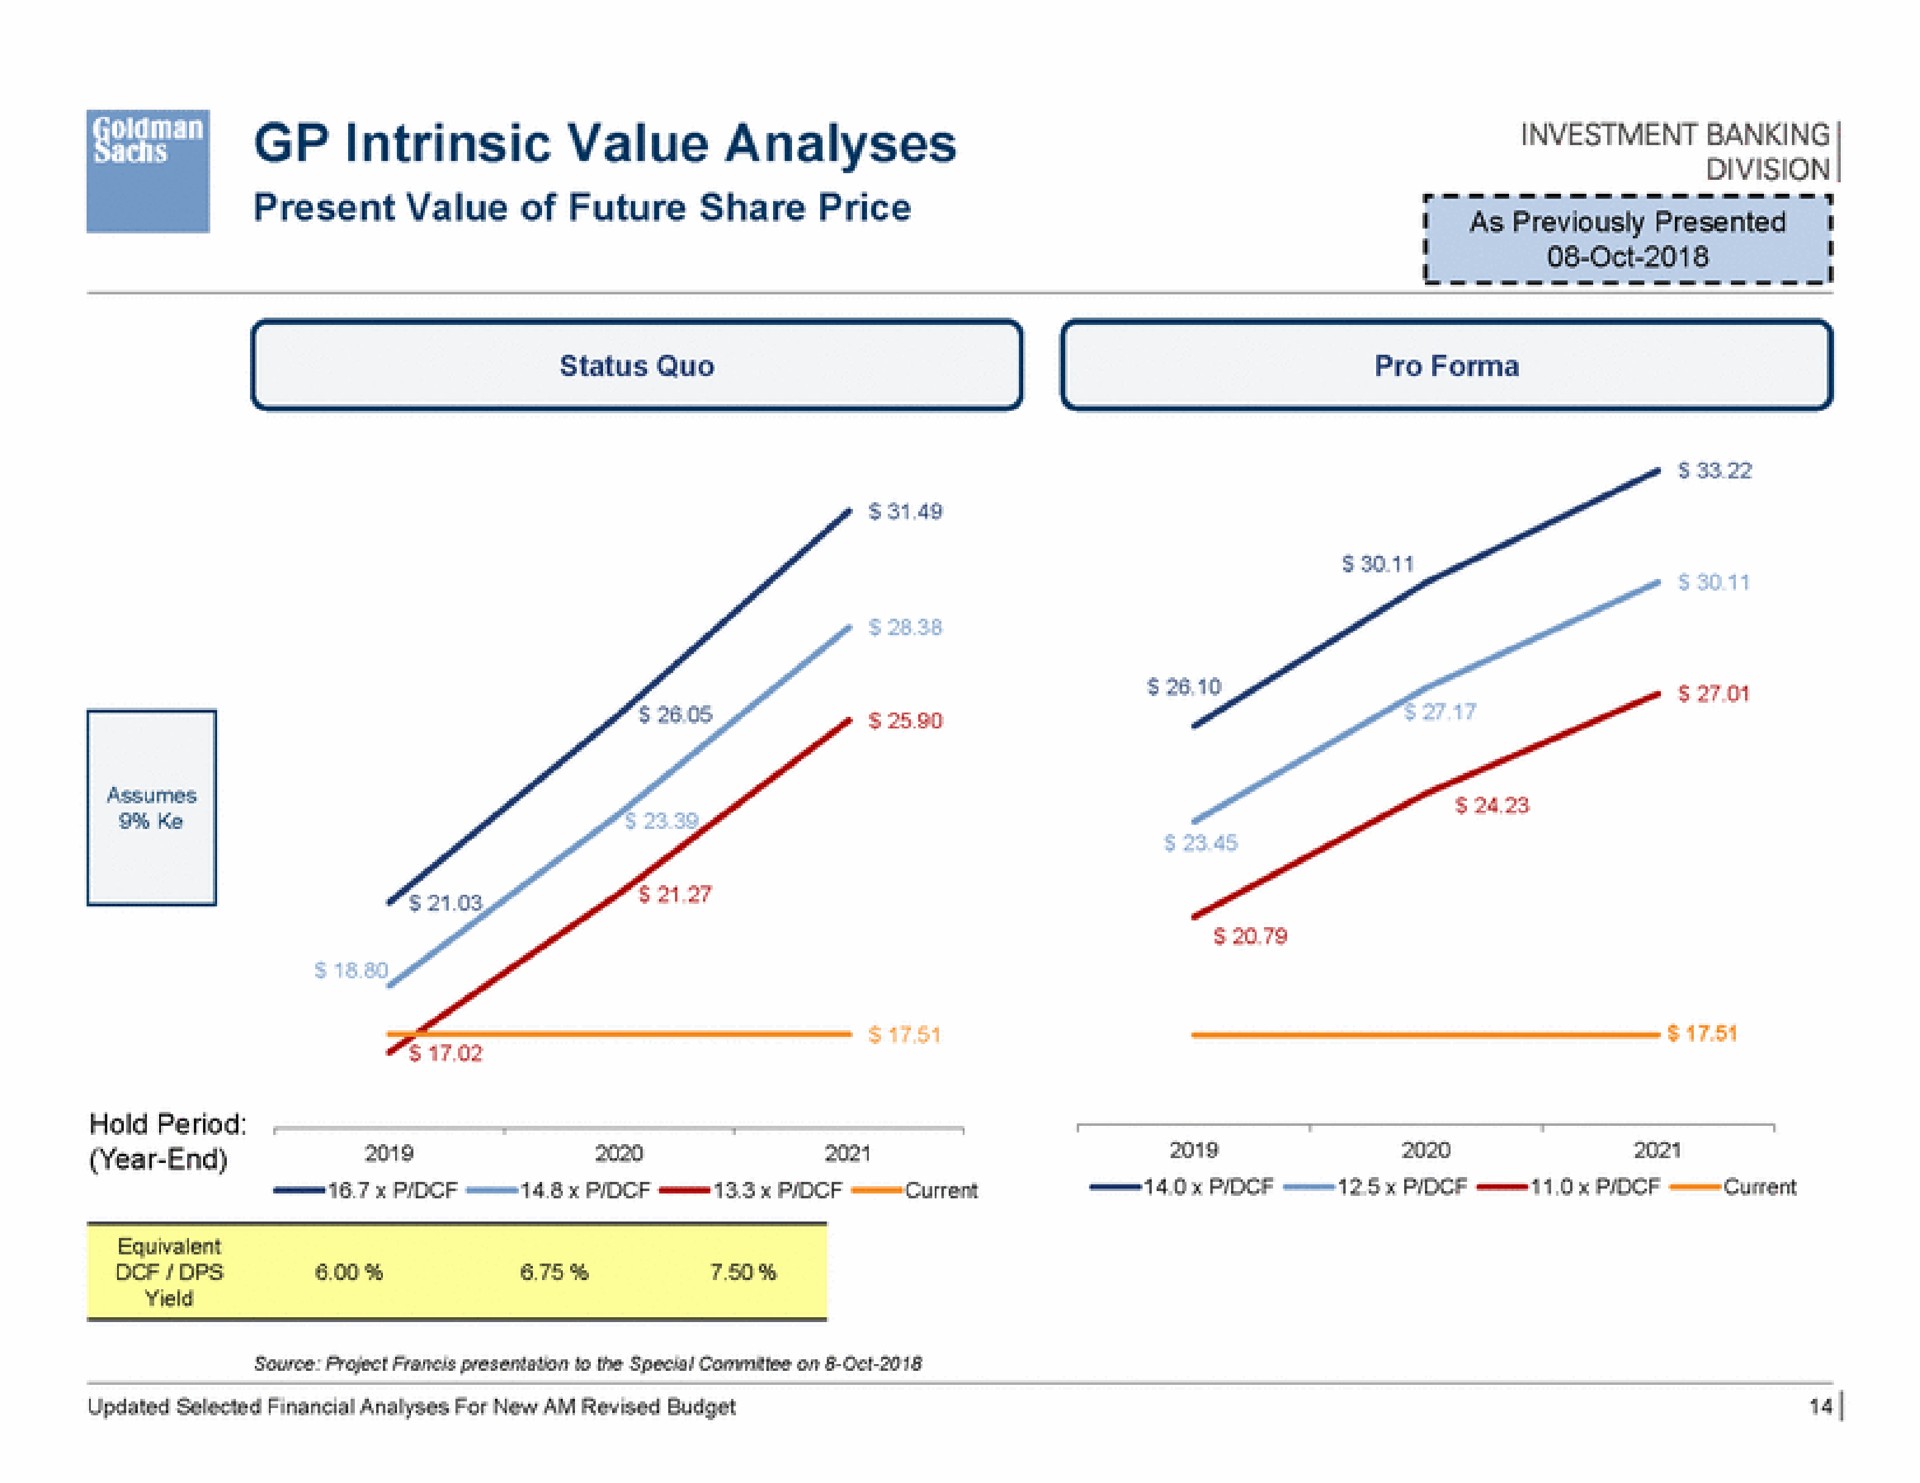 intrinsic value analyses | Goldman Sachs